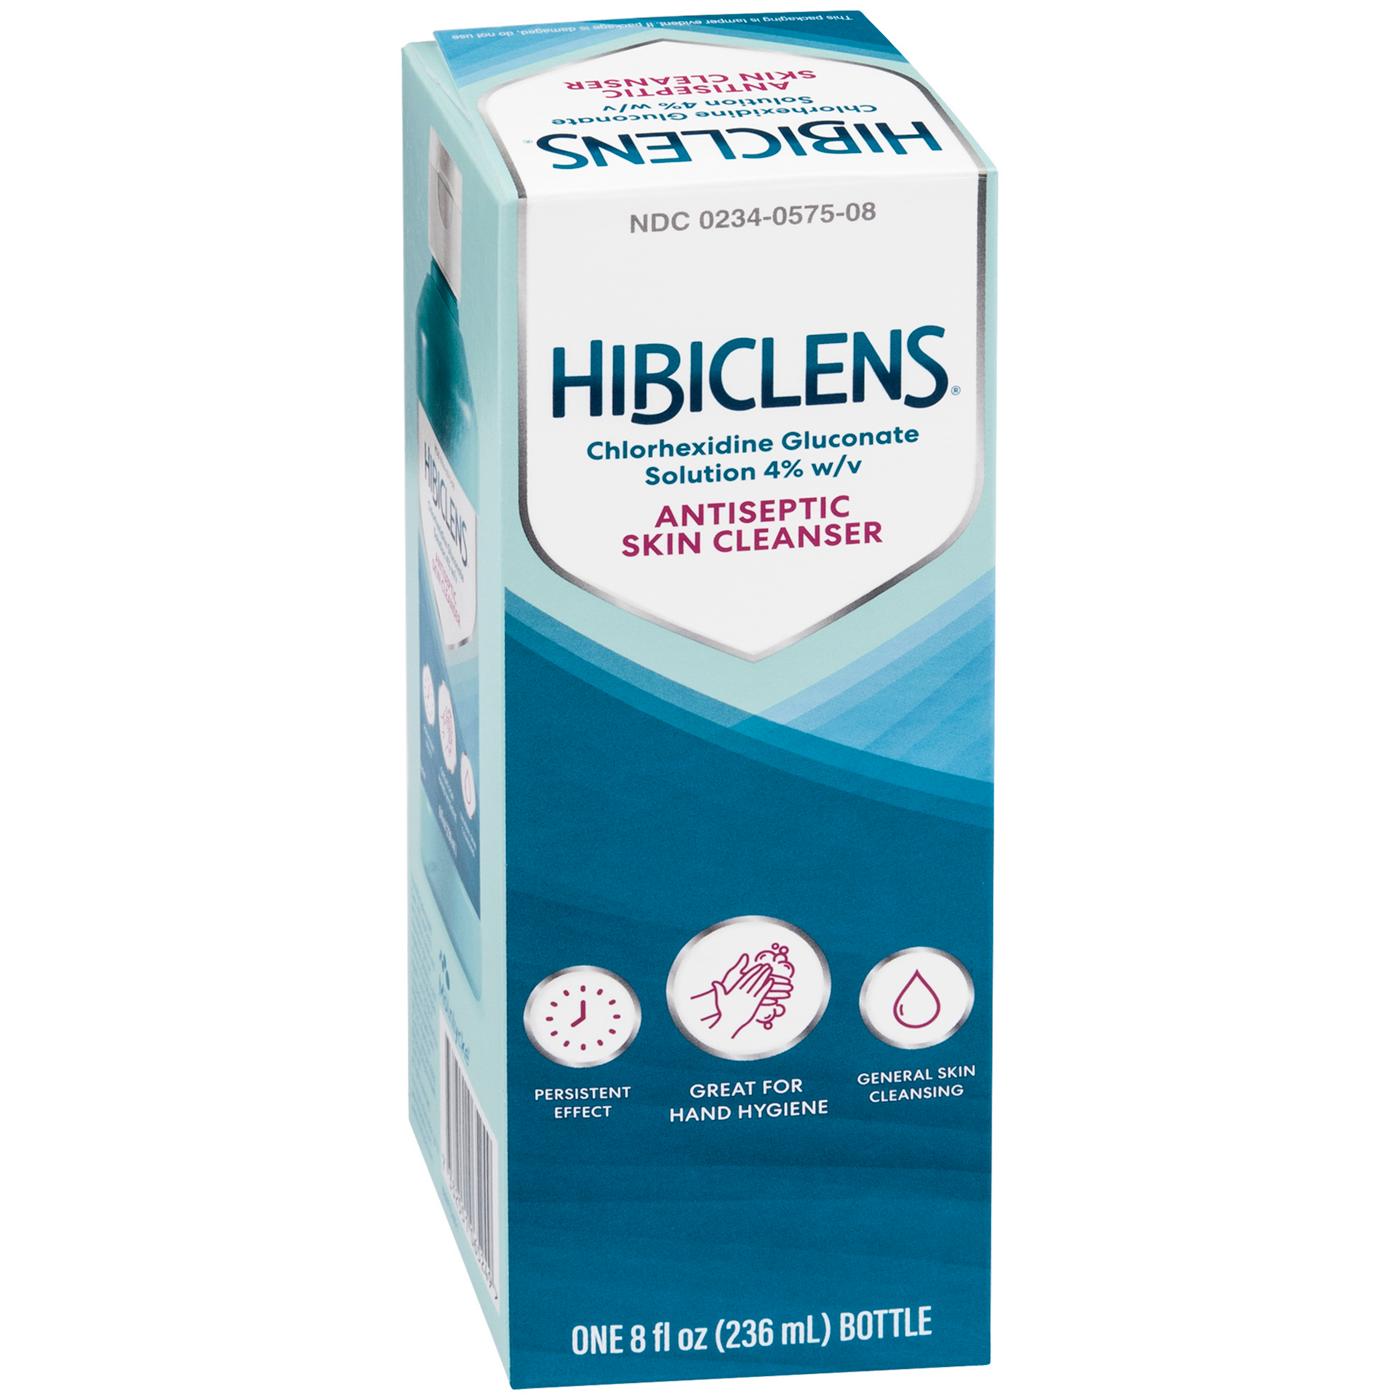 Hibiclens Antiseptic Skin Cleanser; image 5 of 5